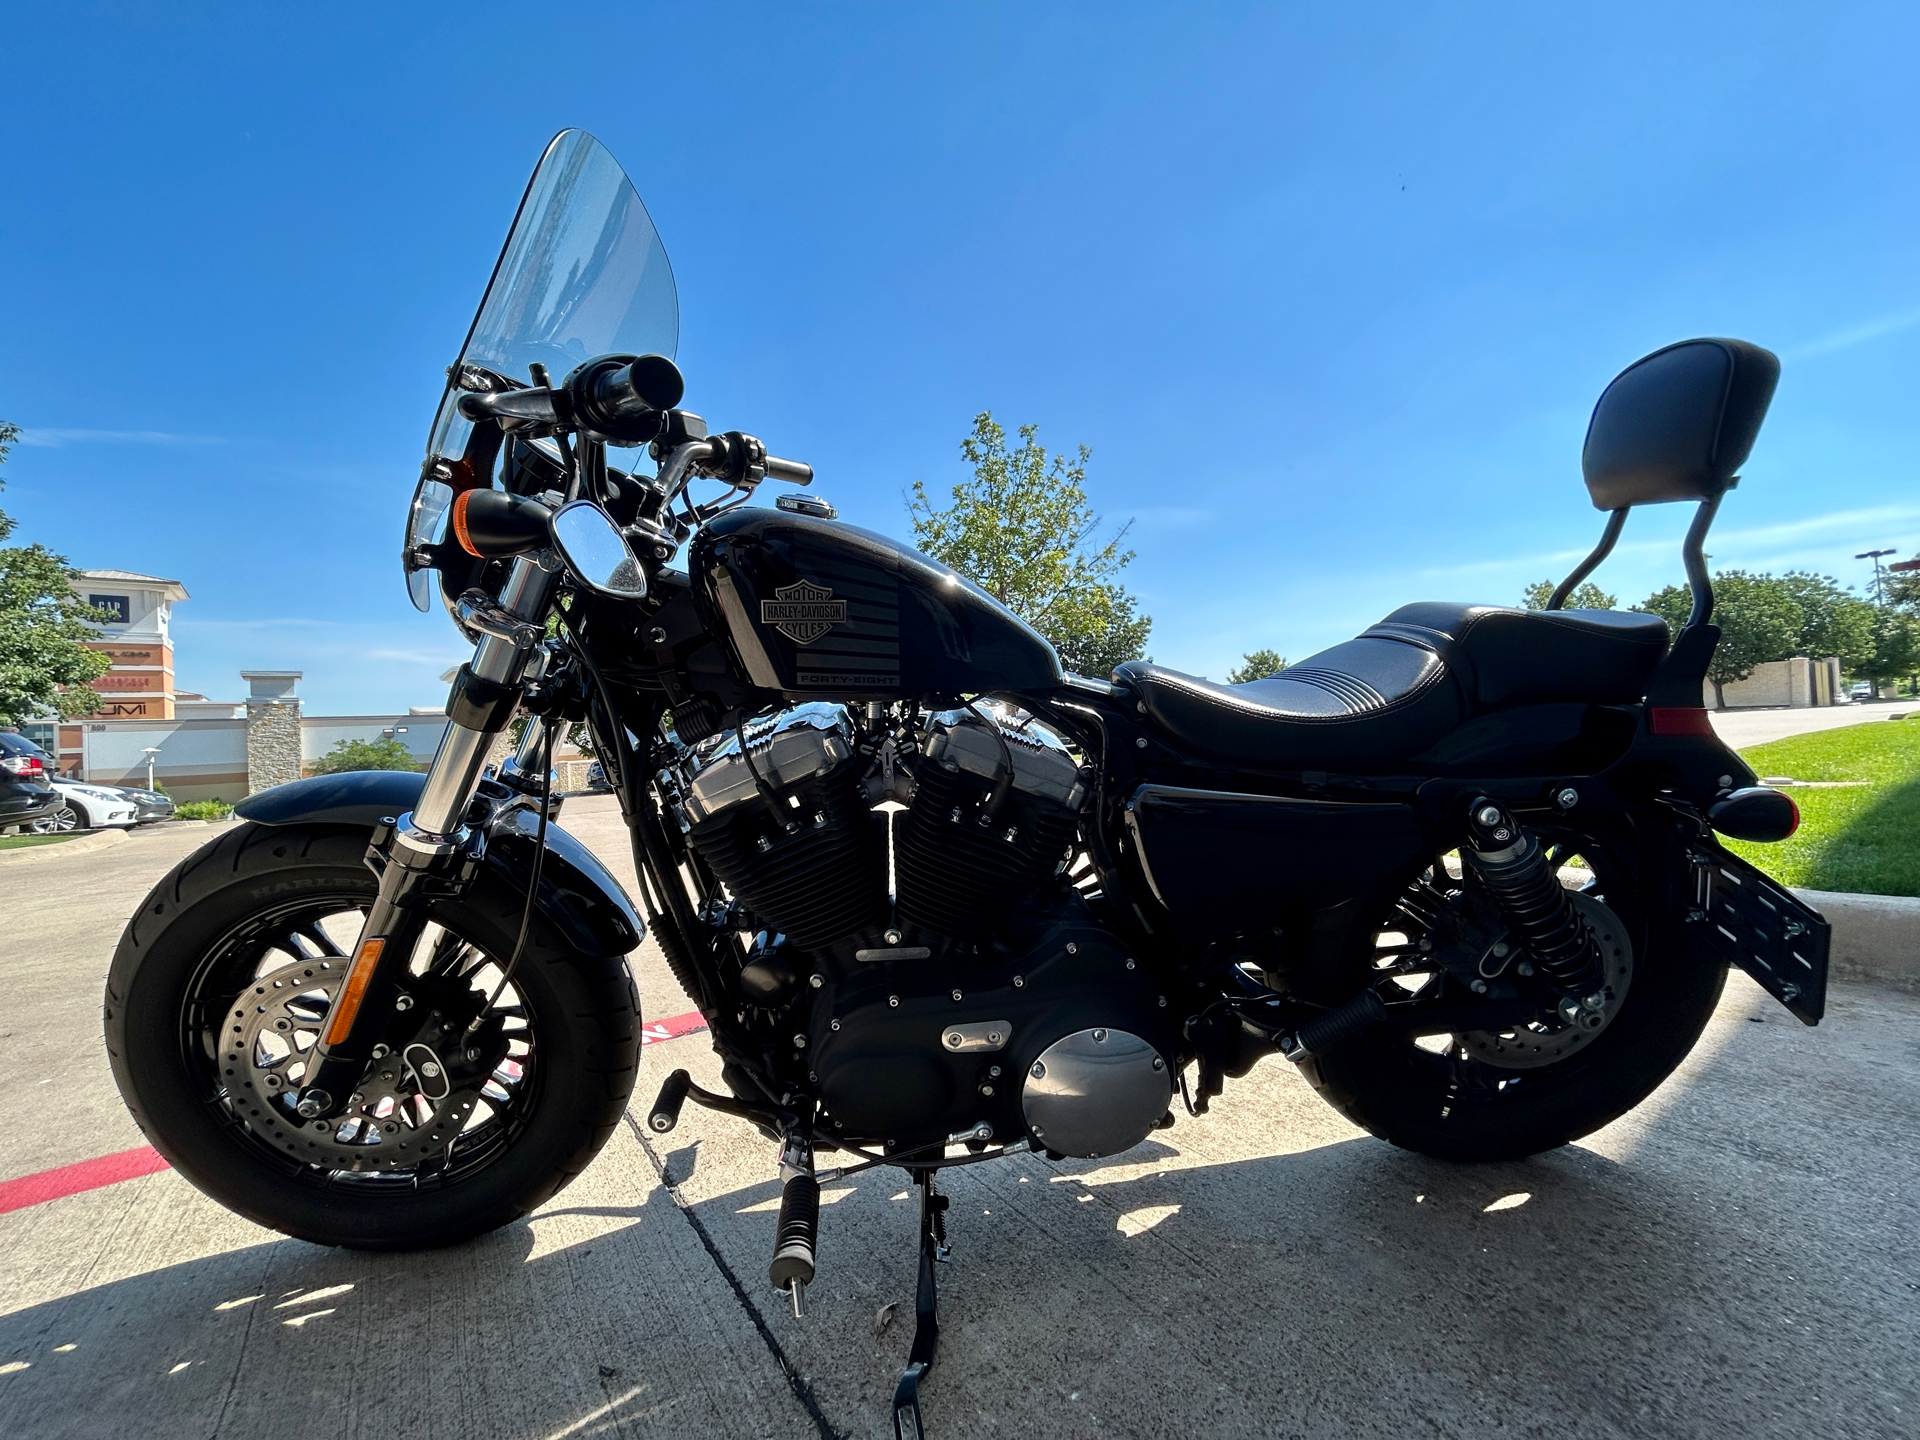 2016 Harley-Davidson Forty-Eight® in Grand Prairie, Texas - Photo 5